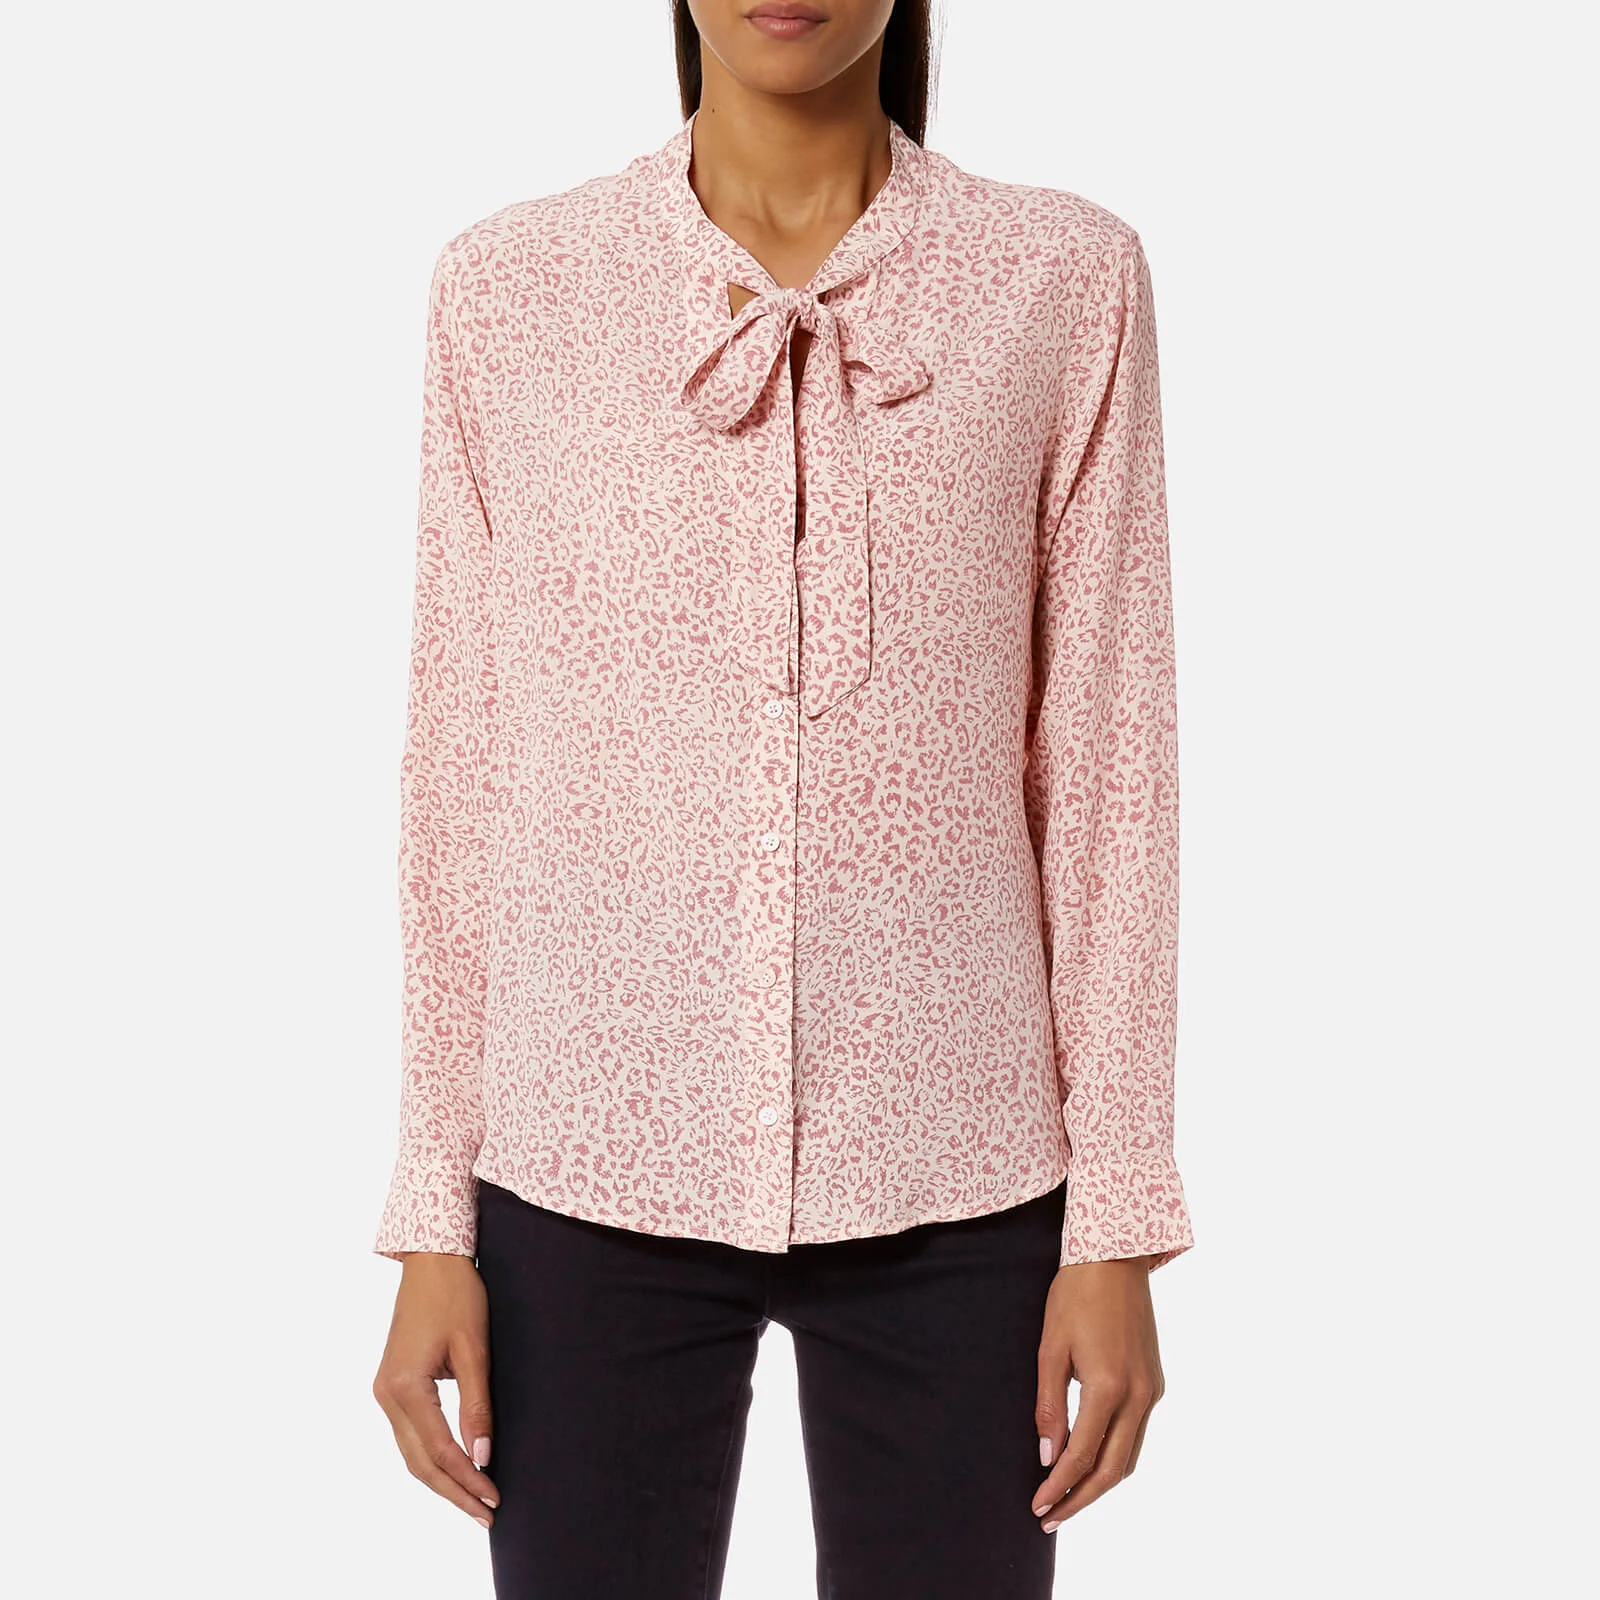 Rails Women's Colette Shirt - Blush Cheetah Image 1